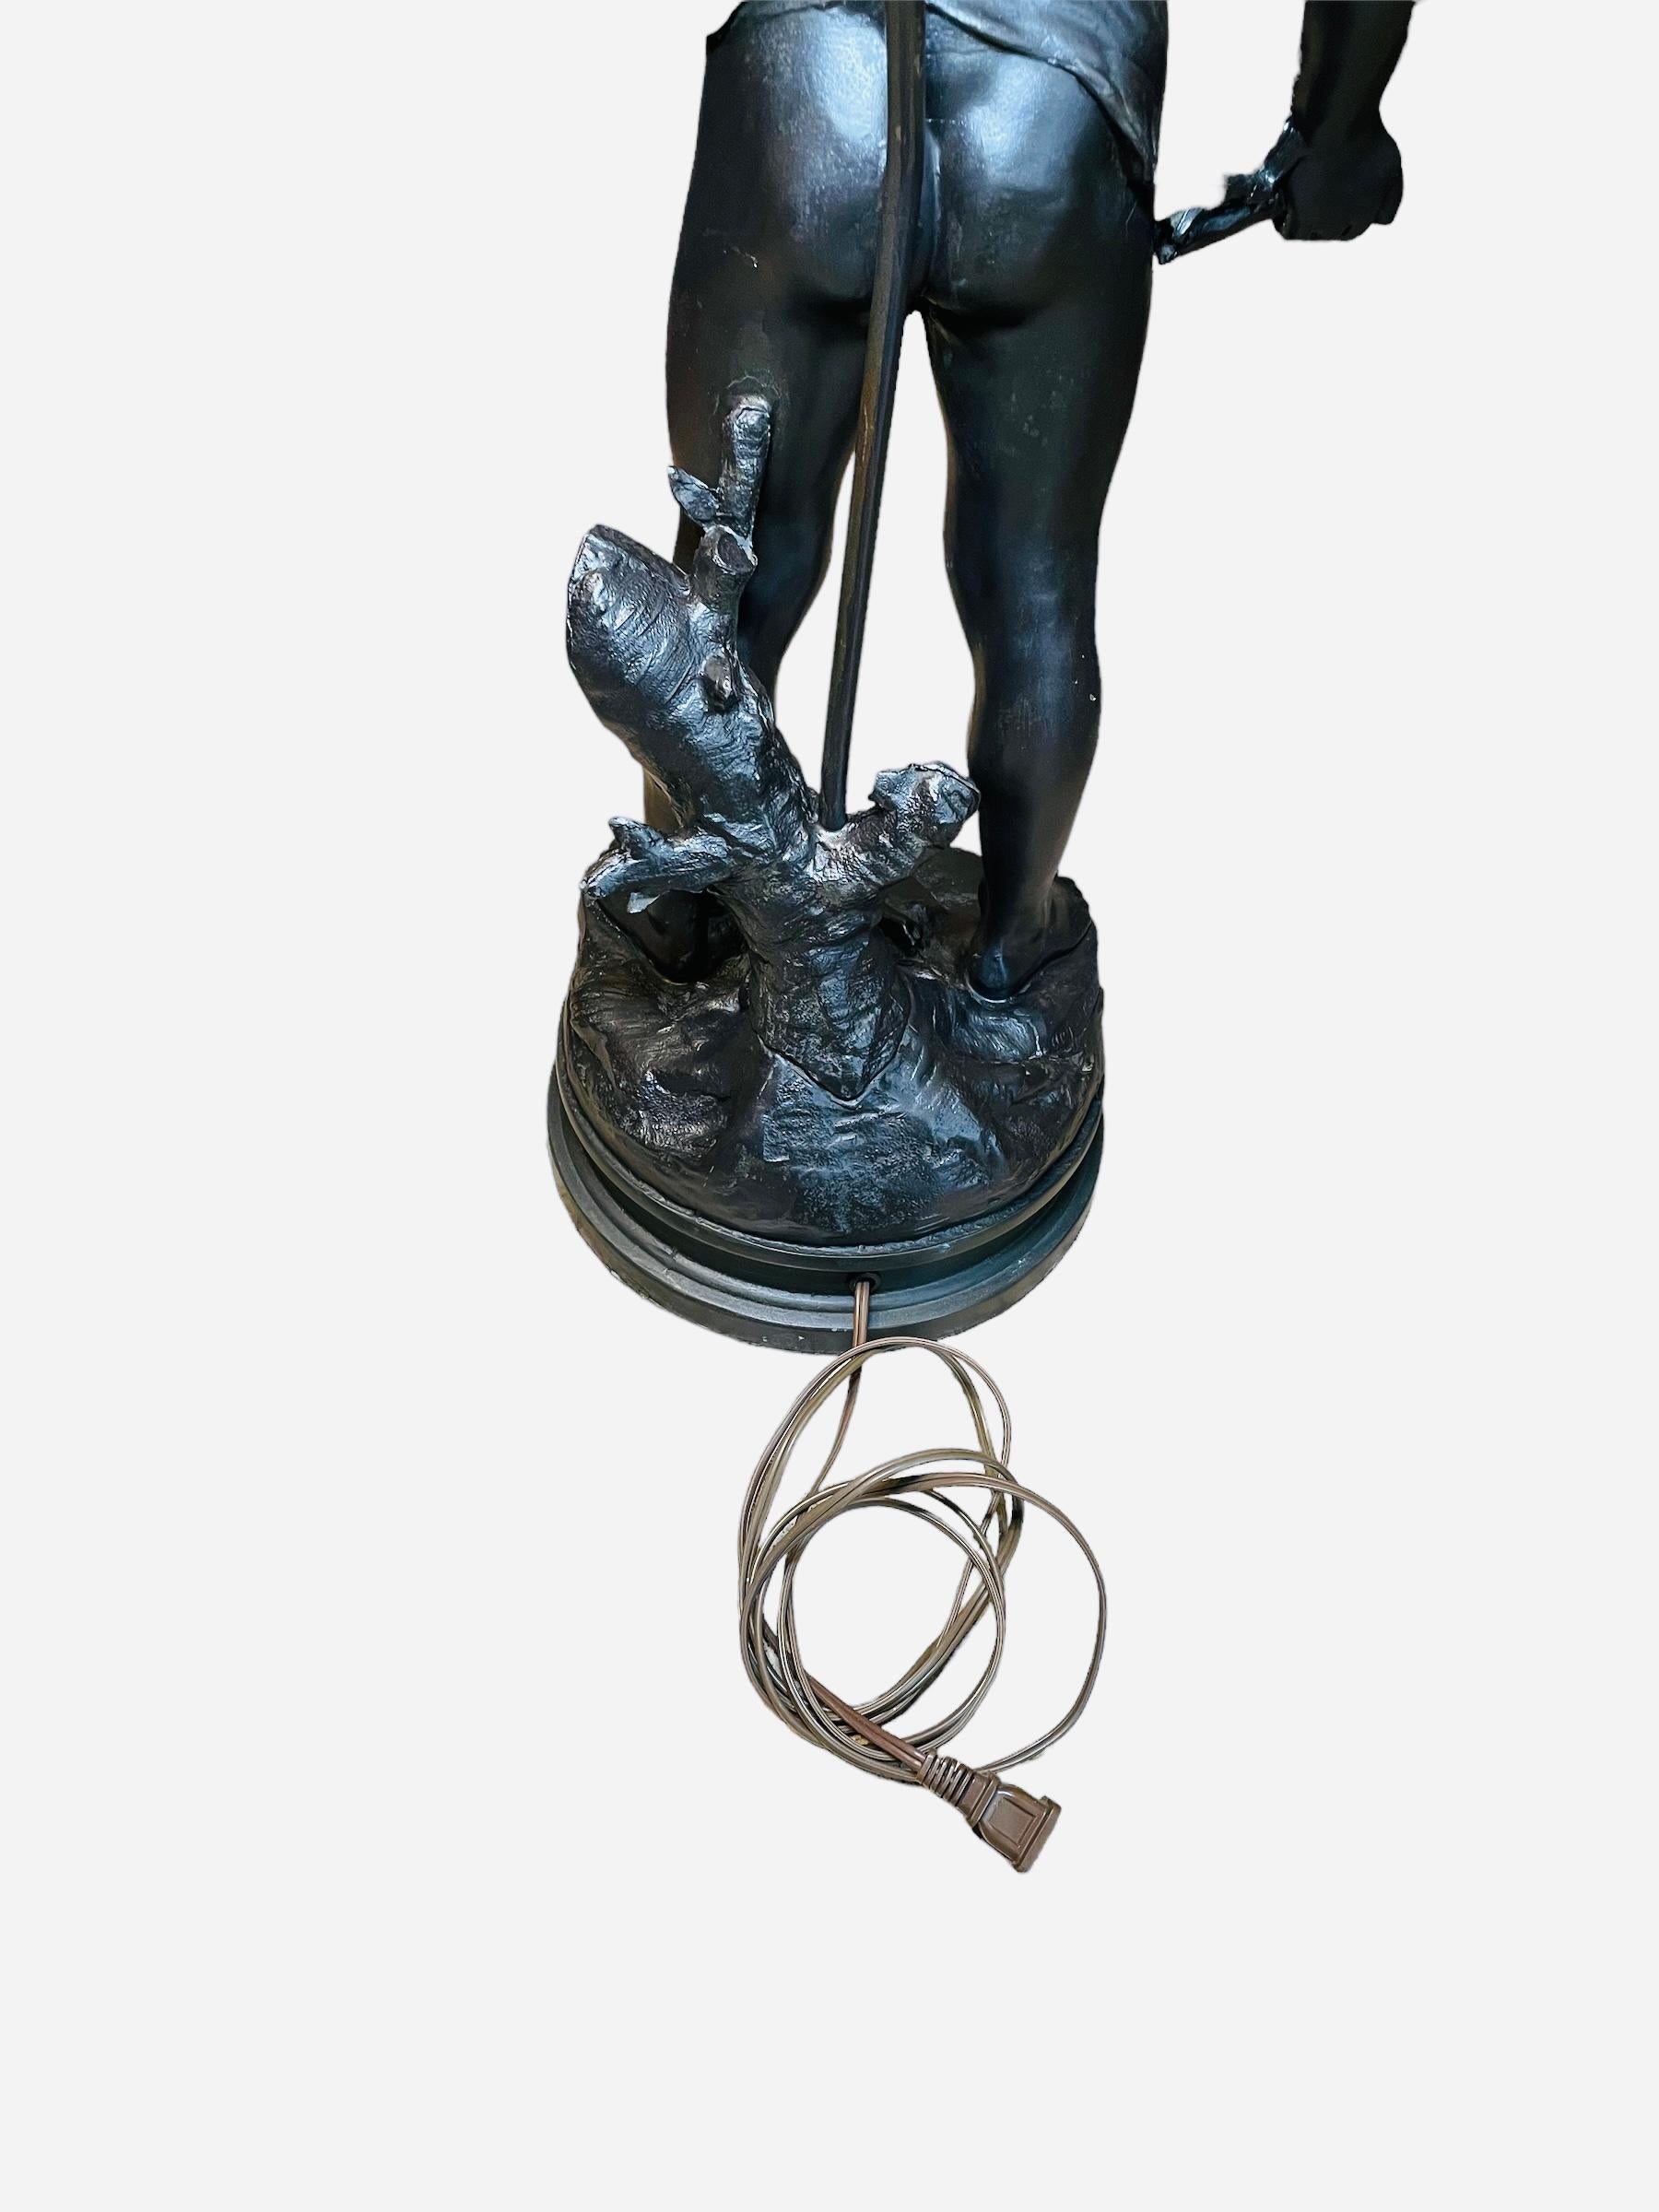 20th Century Auguste Moreau “Charmeur” Patinated Metal Sculpture Lamp